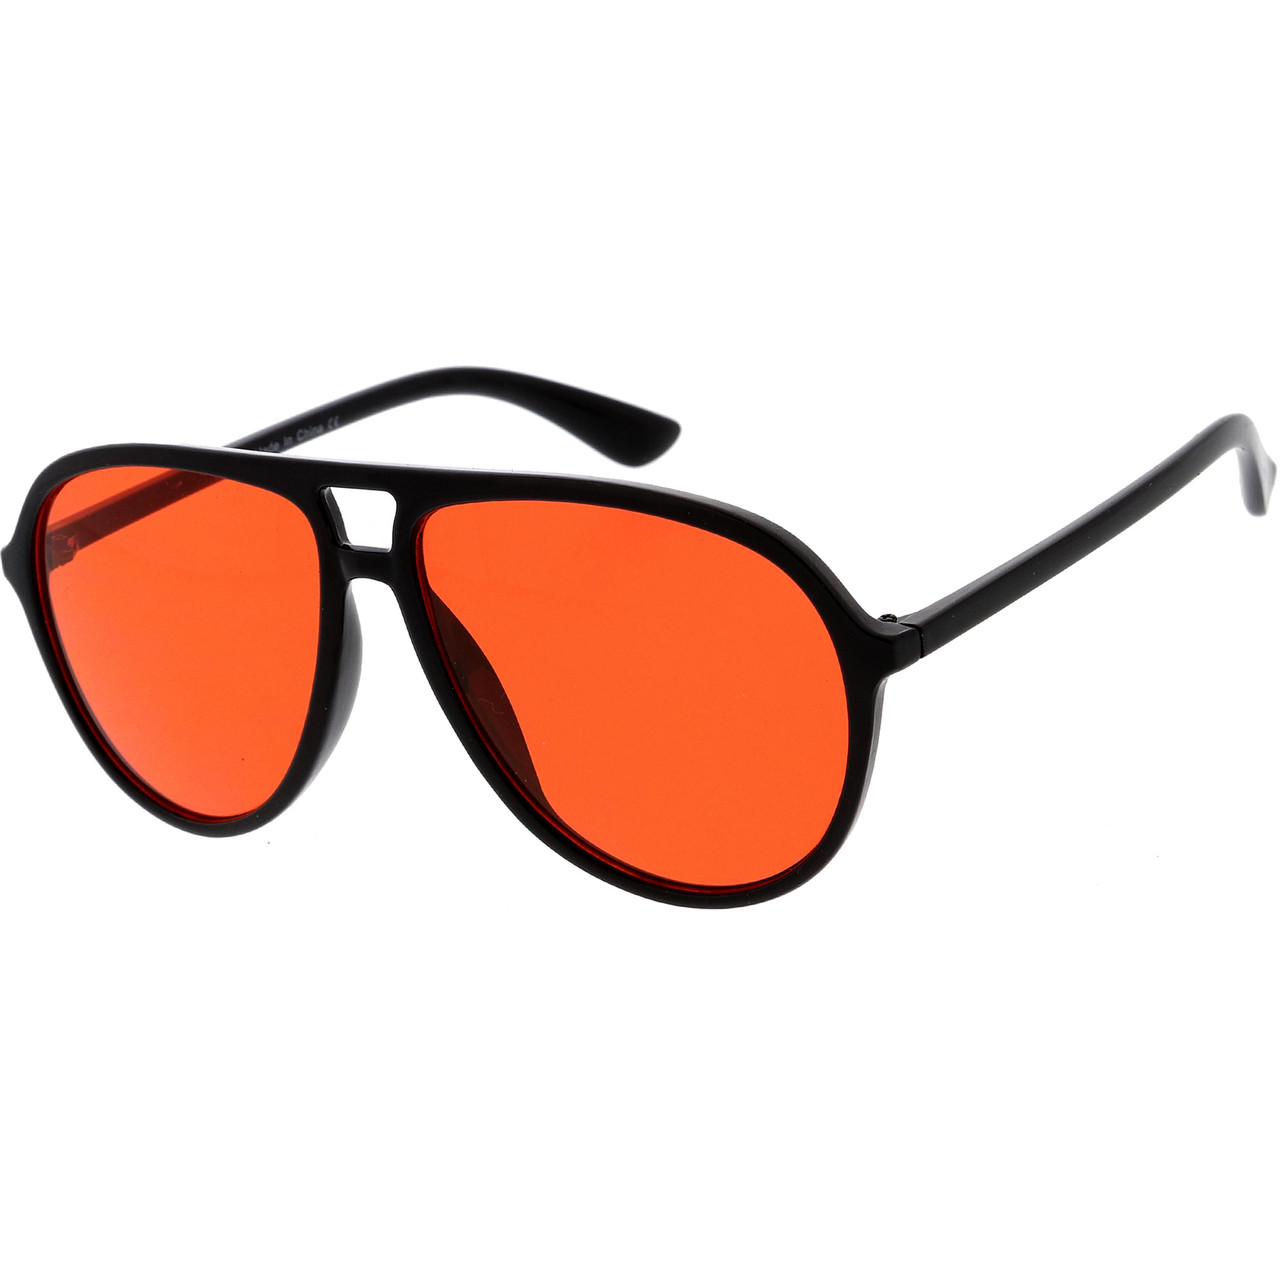 Inspired Sunglasses 55mm Lens Retro Color Tinted Classic 80s Aviator